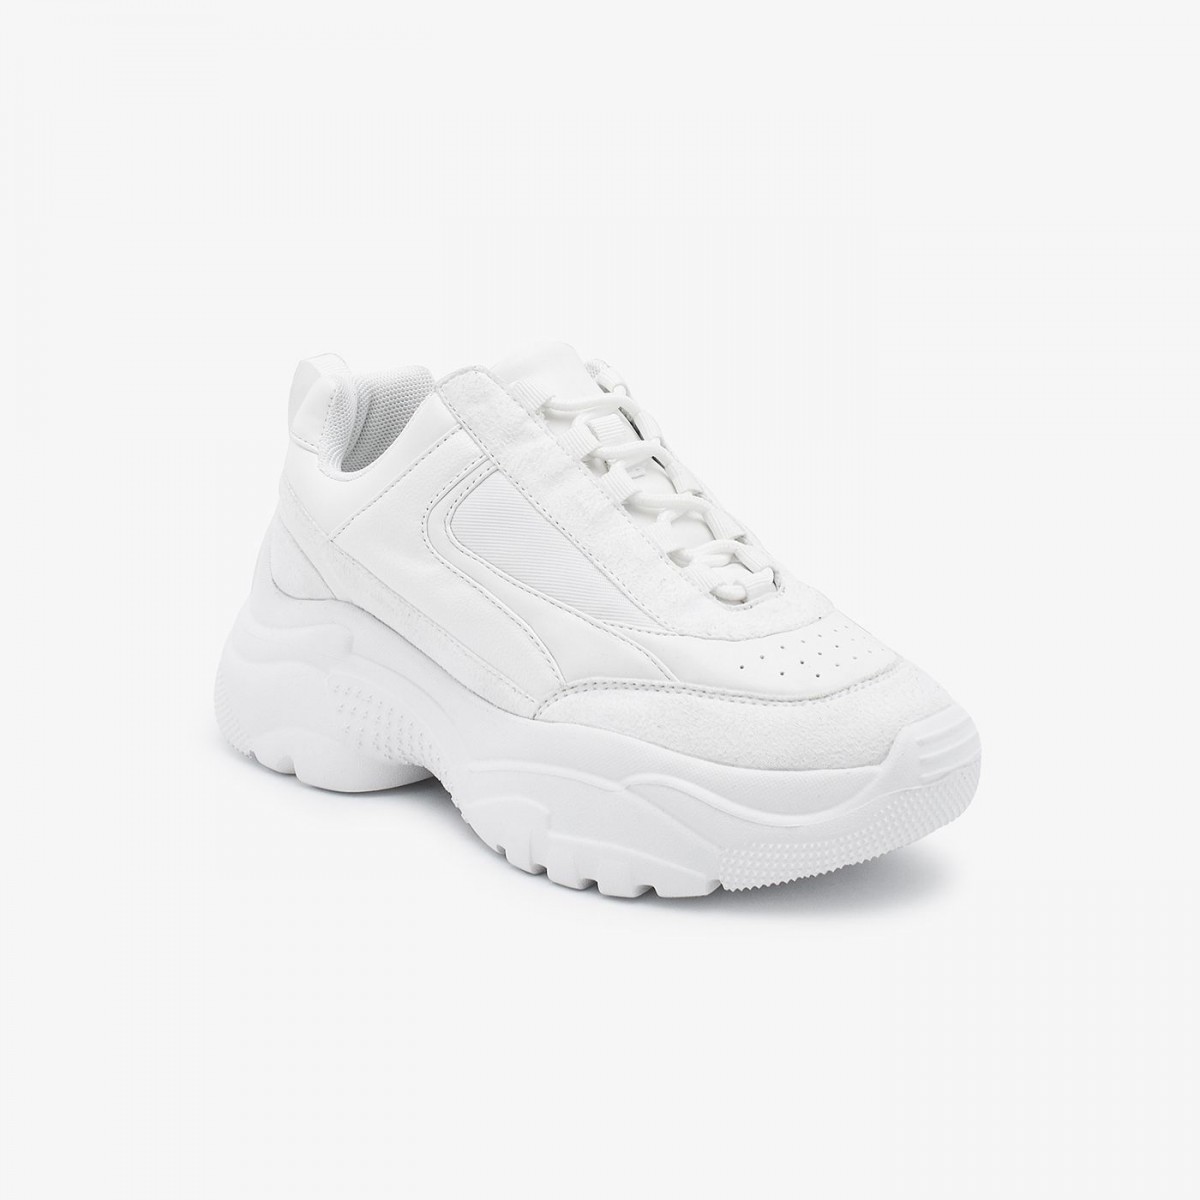 /2019/08/reeva-women-casual-sneakers-rv-sm-0448-white-image1.jpeg